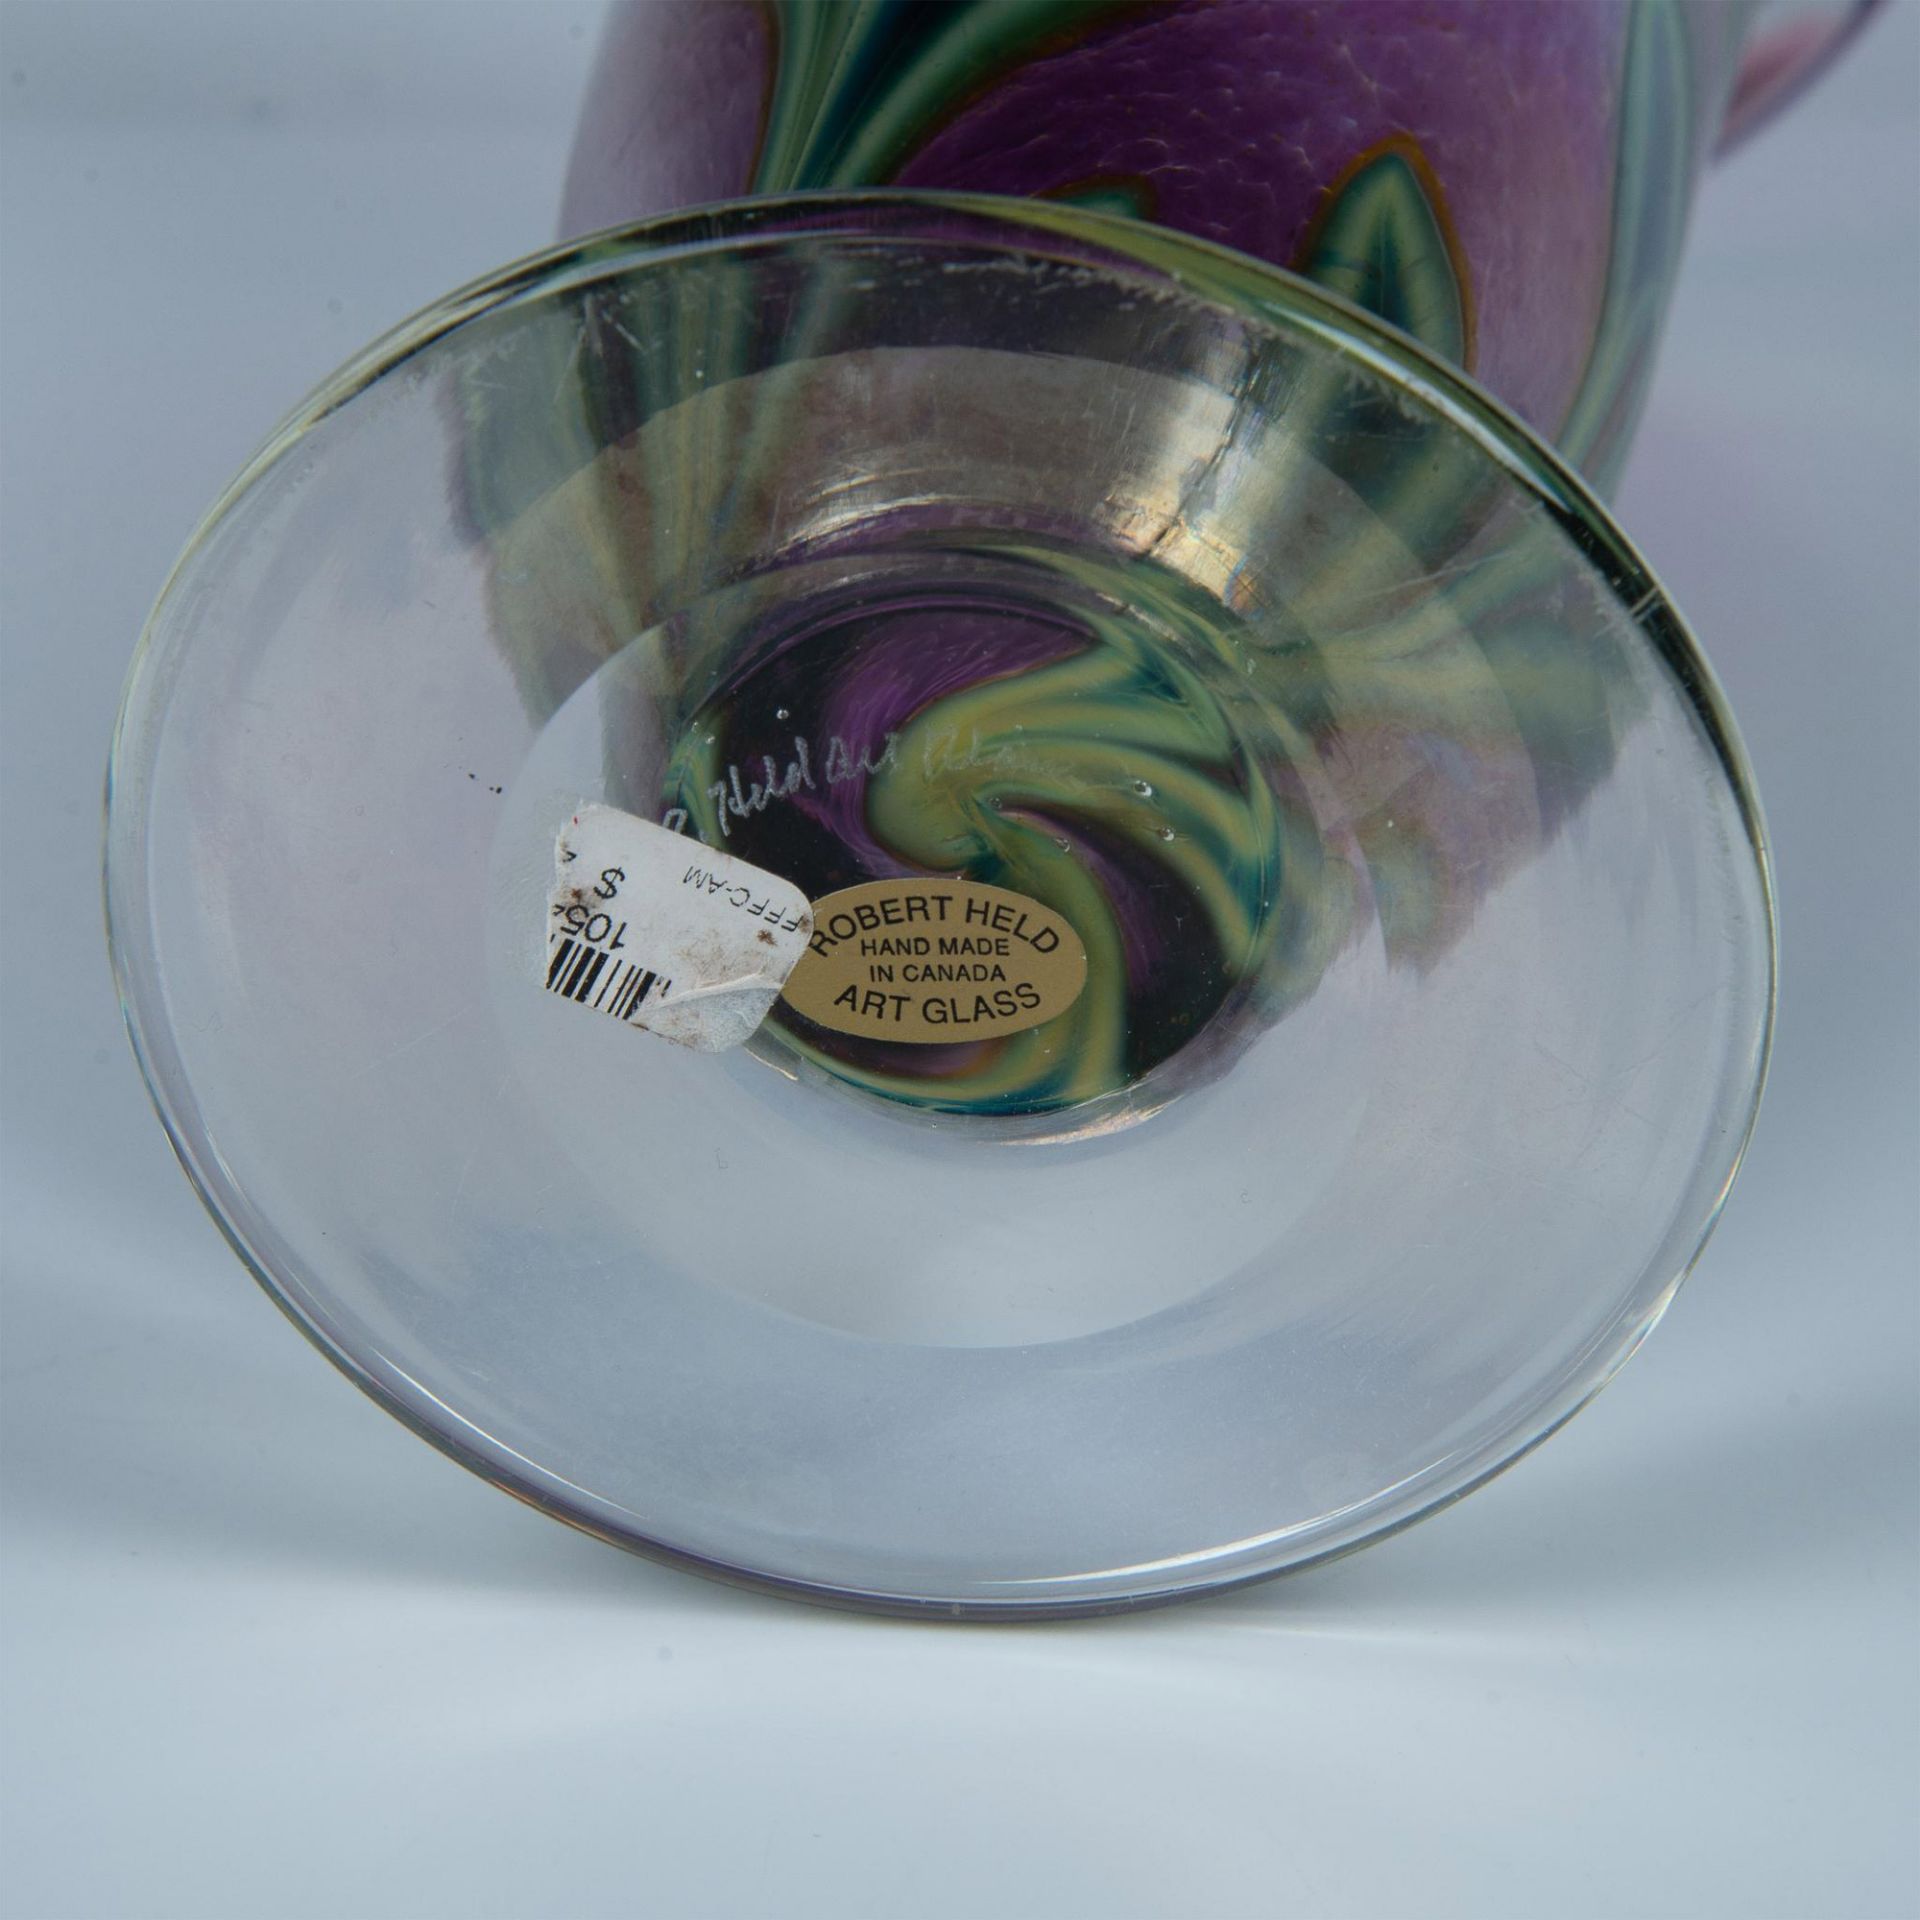 Robert Held Signed Art Glass Iridescent Vase - Image 5 of 6